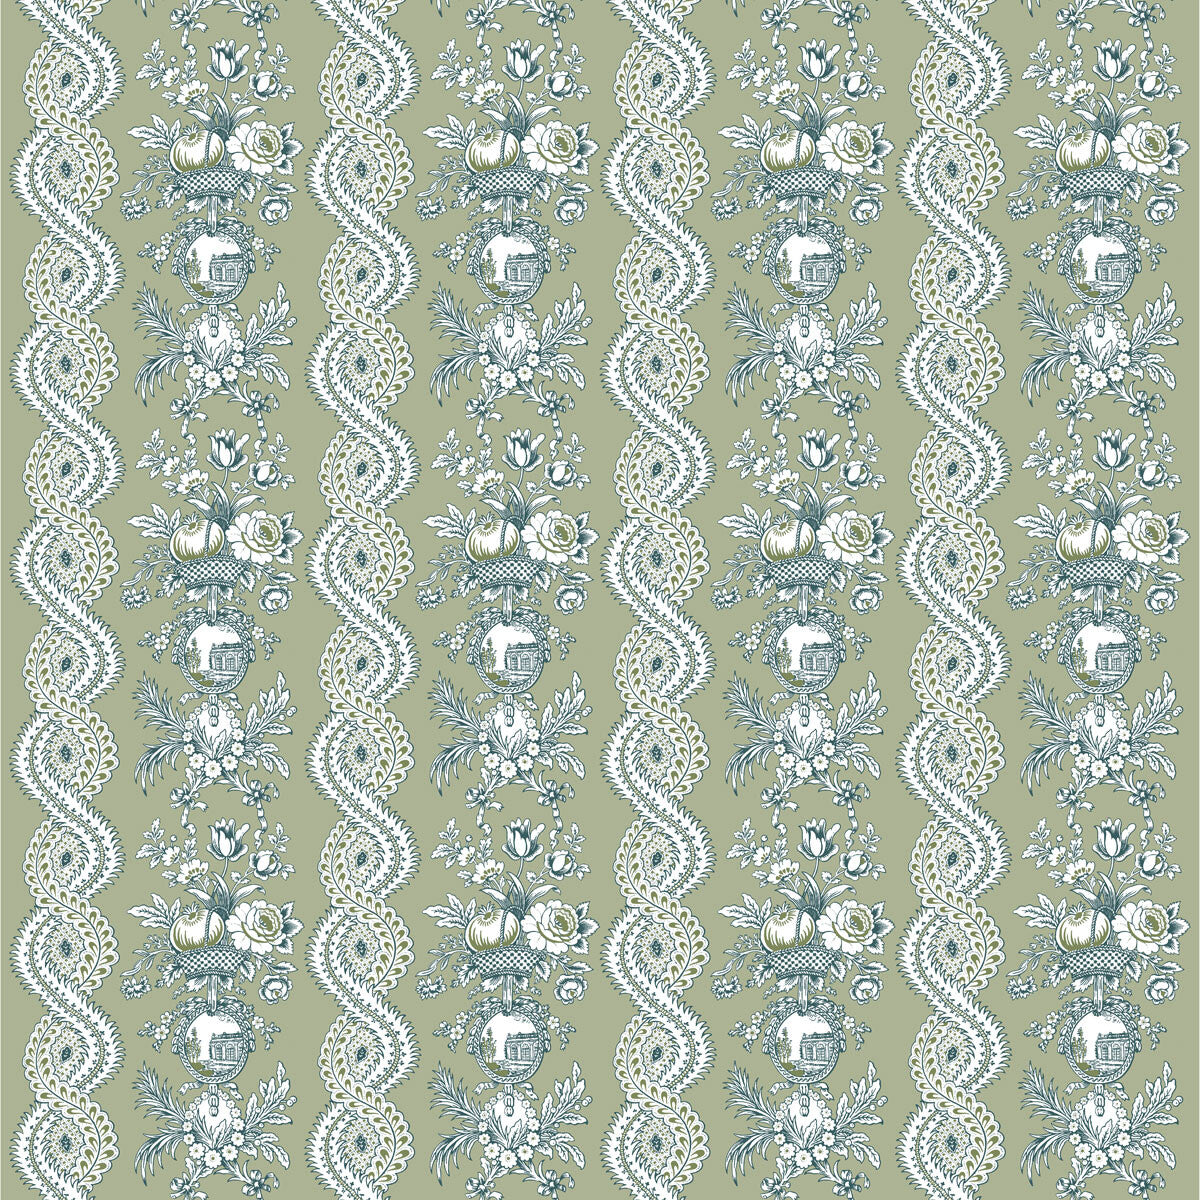 Pilara fabric in verde color - pattern LCT1059.002.0 - by Gaston y Daniela in the Lorenzo Castillo VI collection